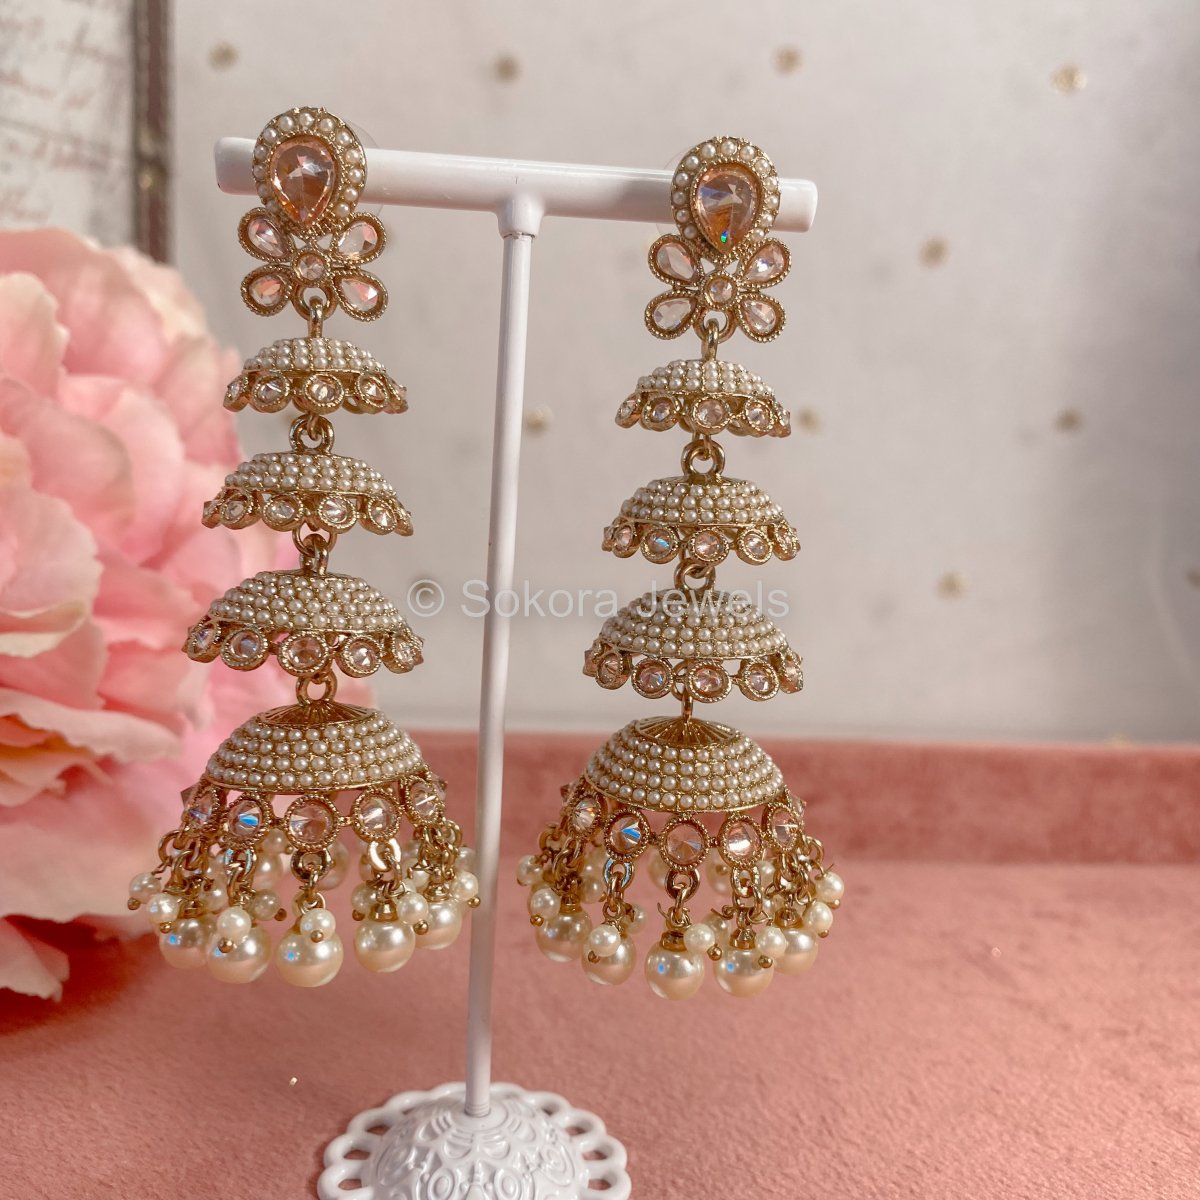 Buy Silver Jhumka Earrings - Silver Indian Earrings | Paksha Tagged 